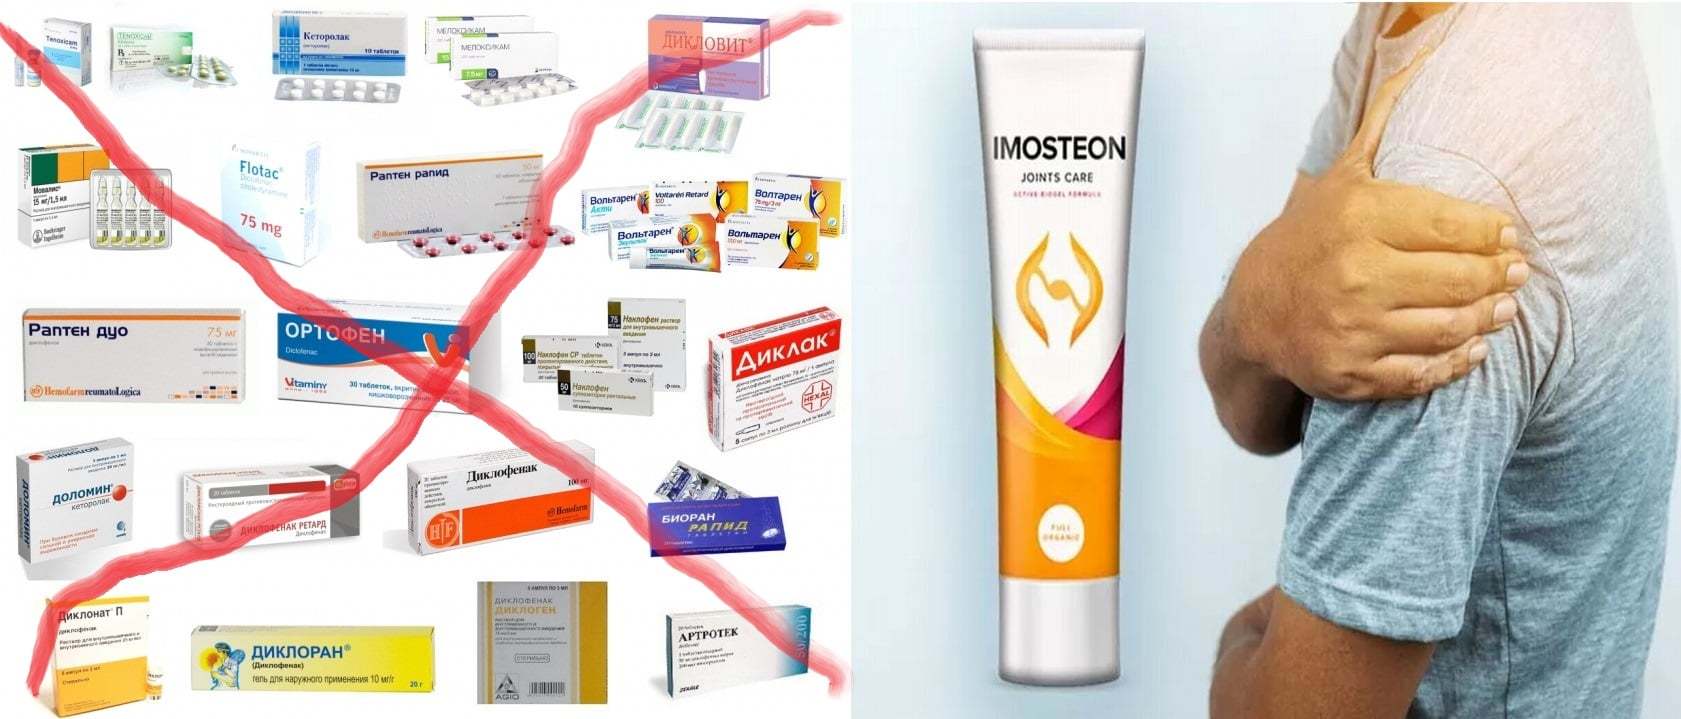 Imosteon gel – pareri, pret, ingrediente, prospect, forum, farmacie, comanda, catena – România